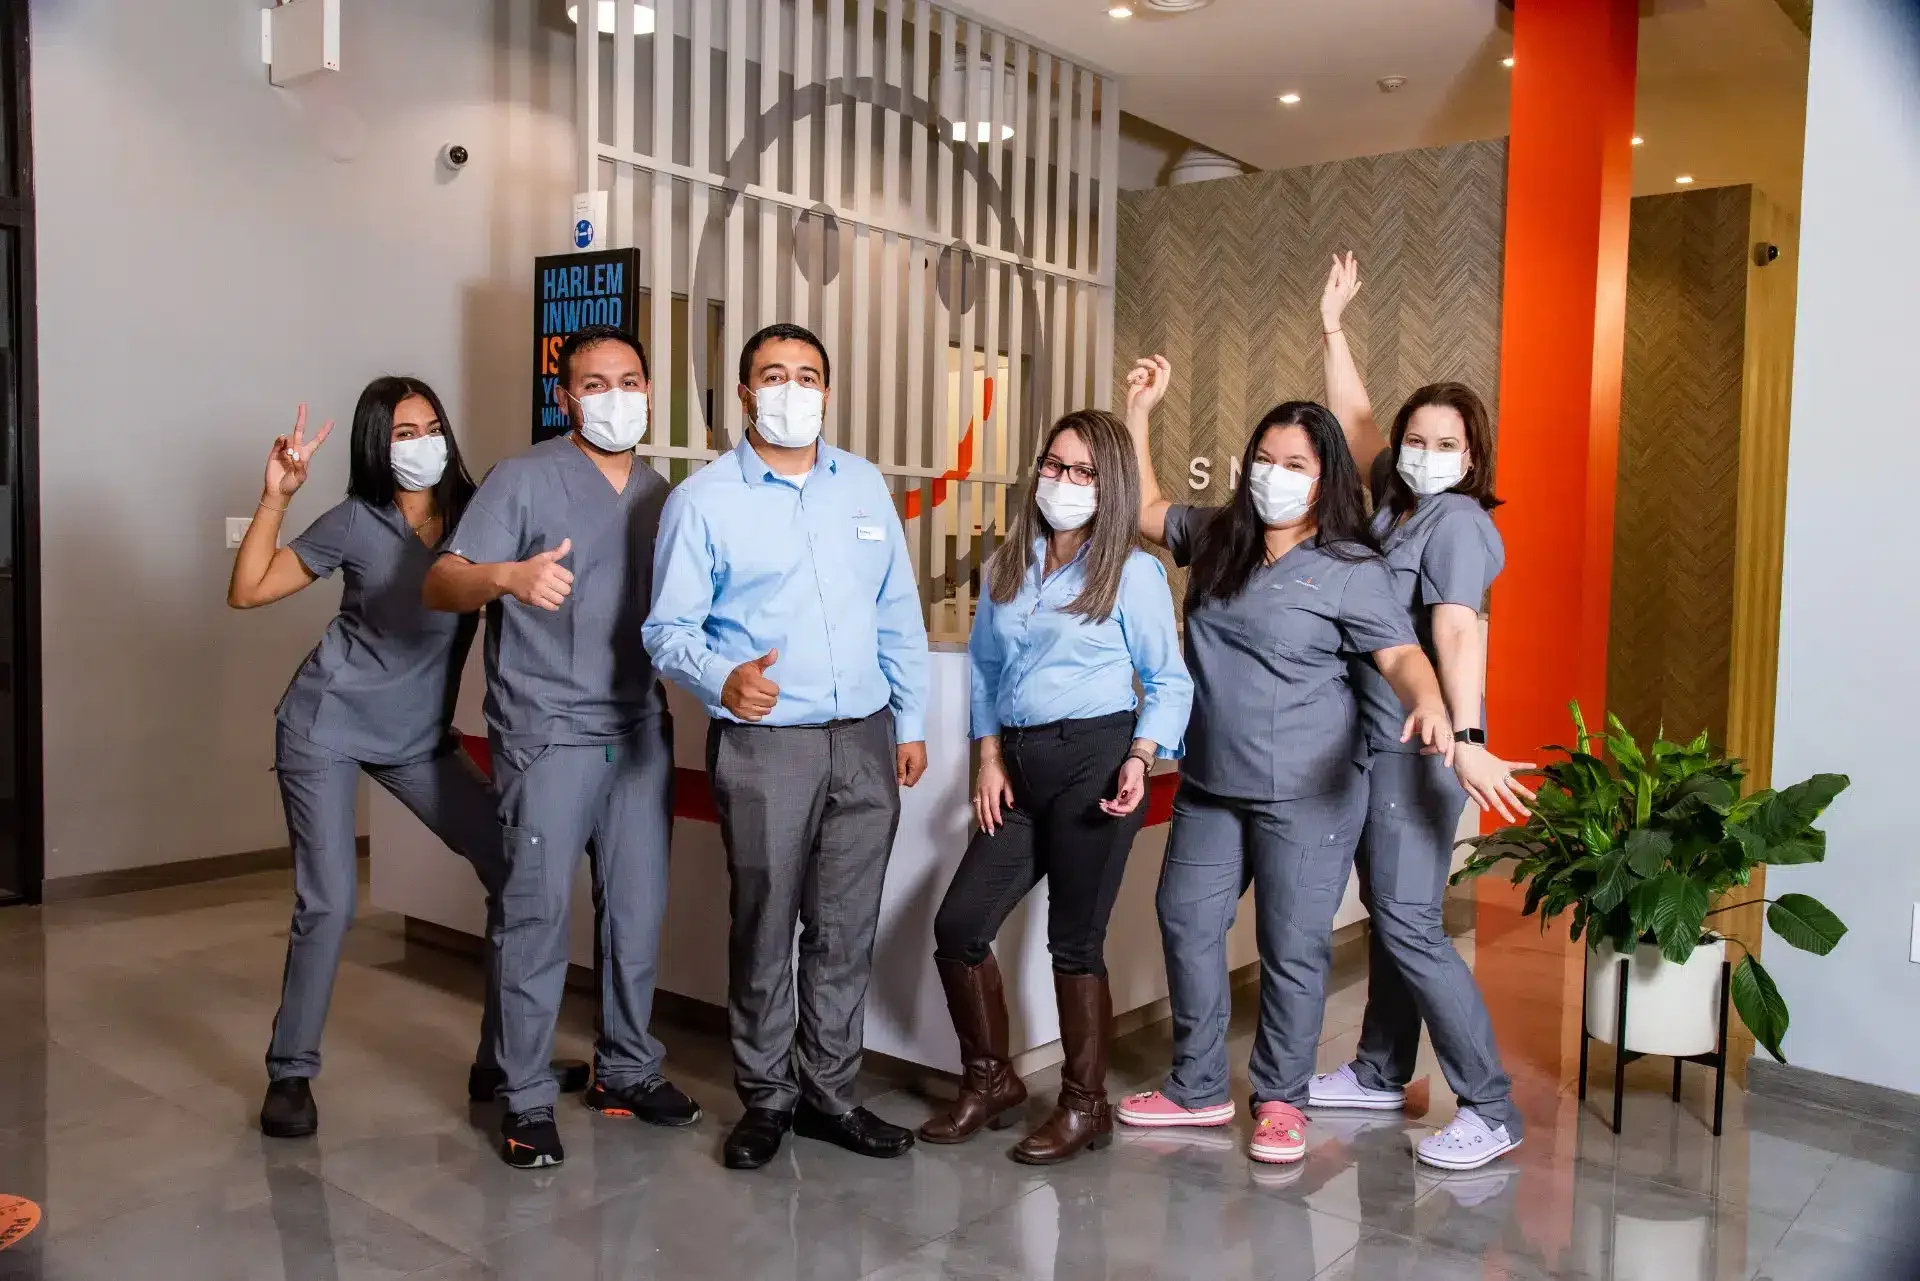 The orthodontic team posing